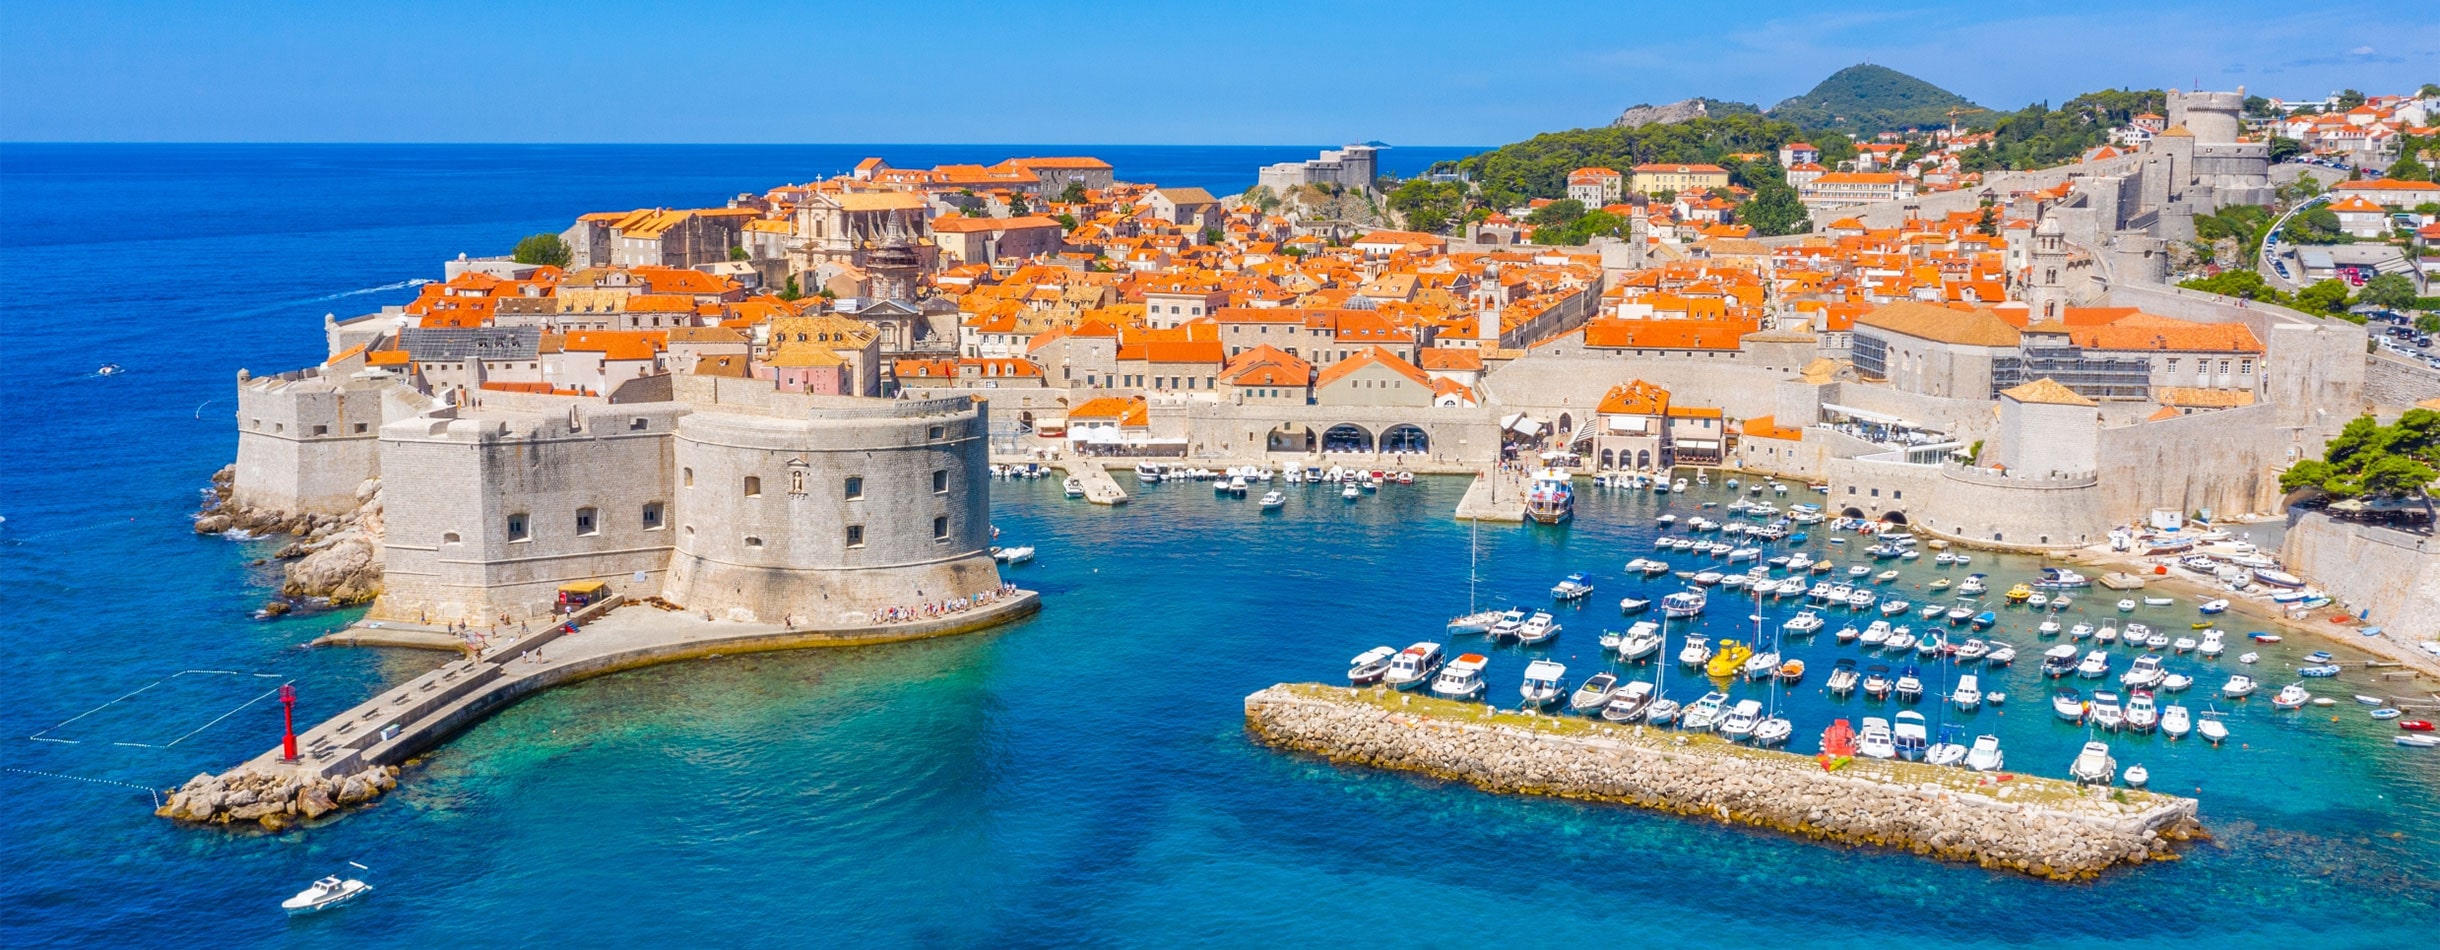 Old Town Dubrovnik, Croatia 